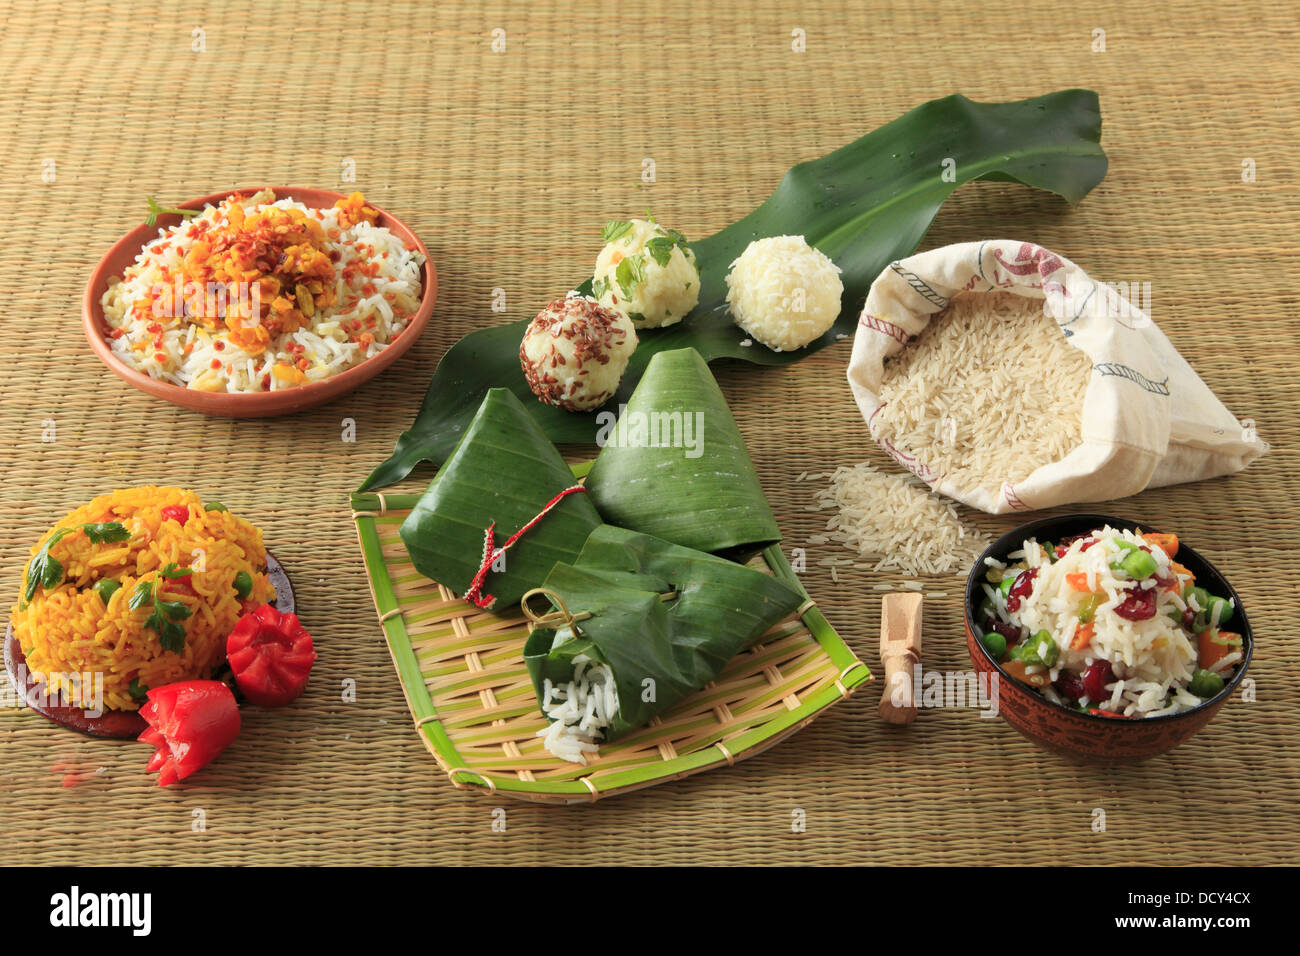 Rice, variety of ways of preparing and presenting, Stock Photo